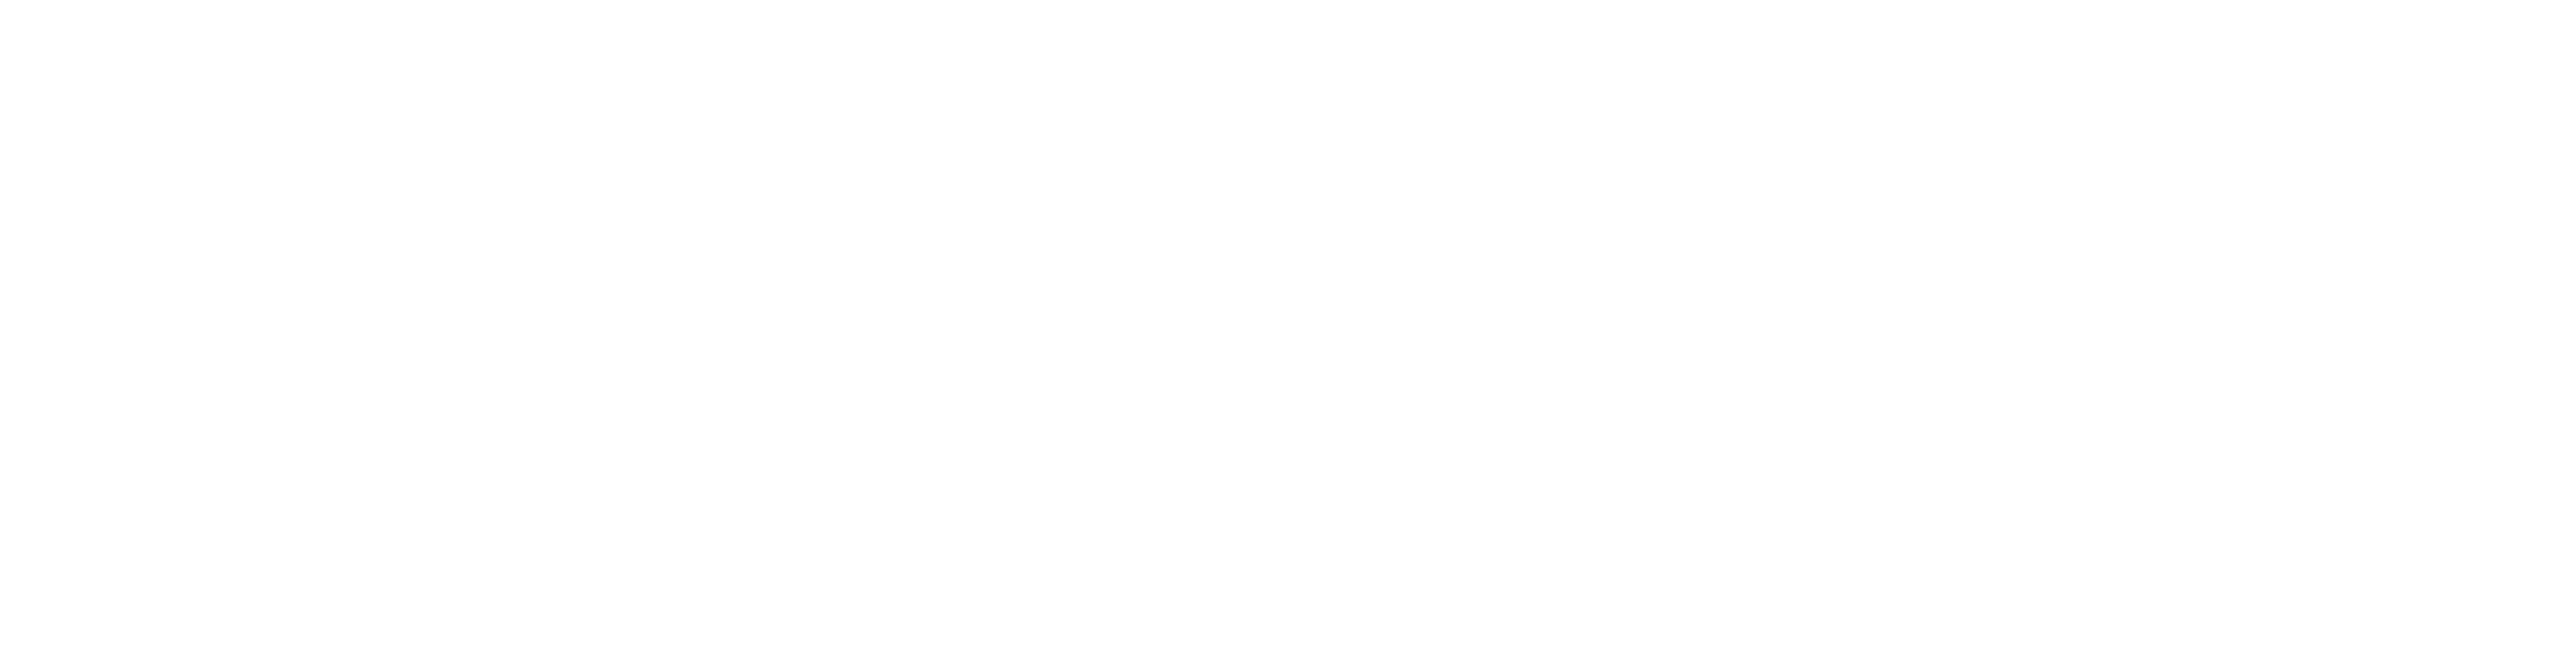 kununu logo white